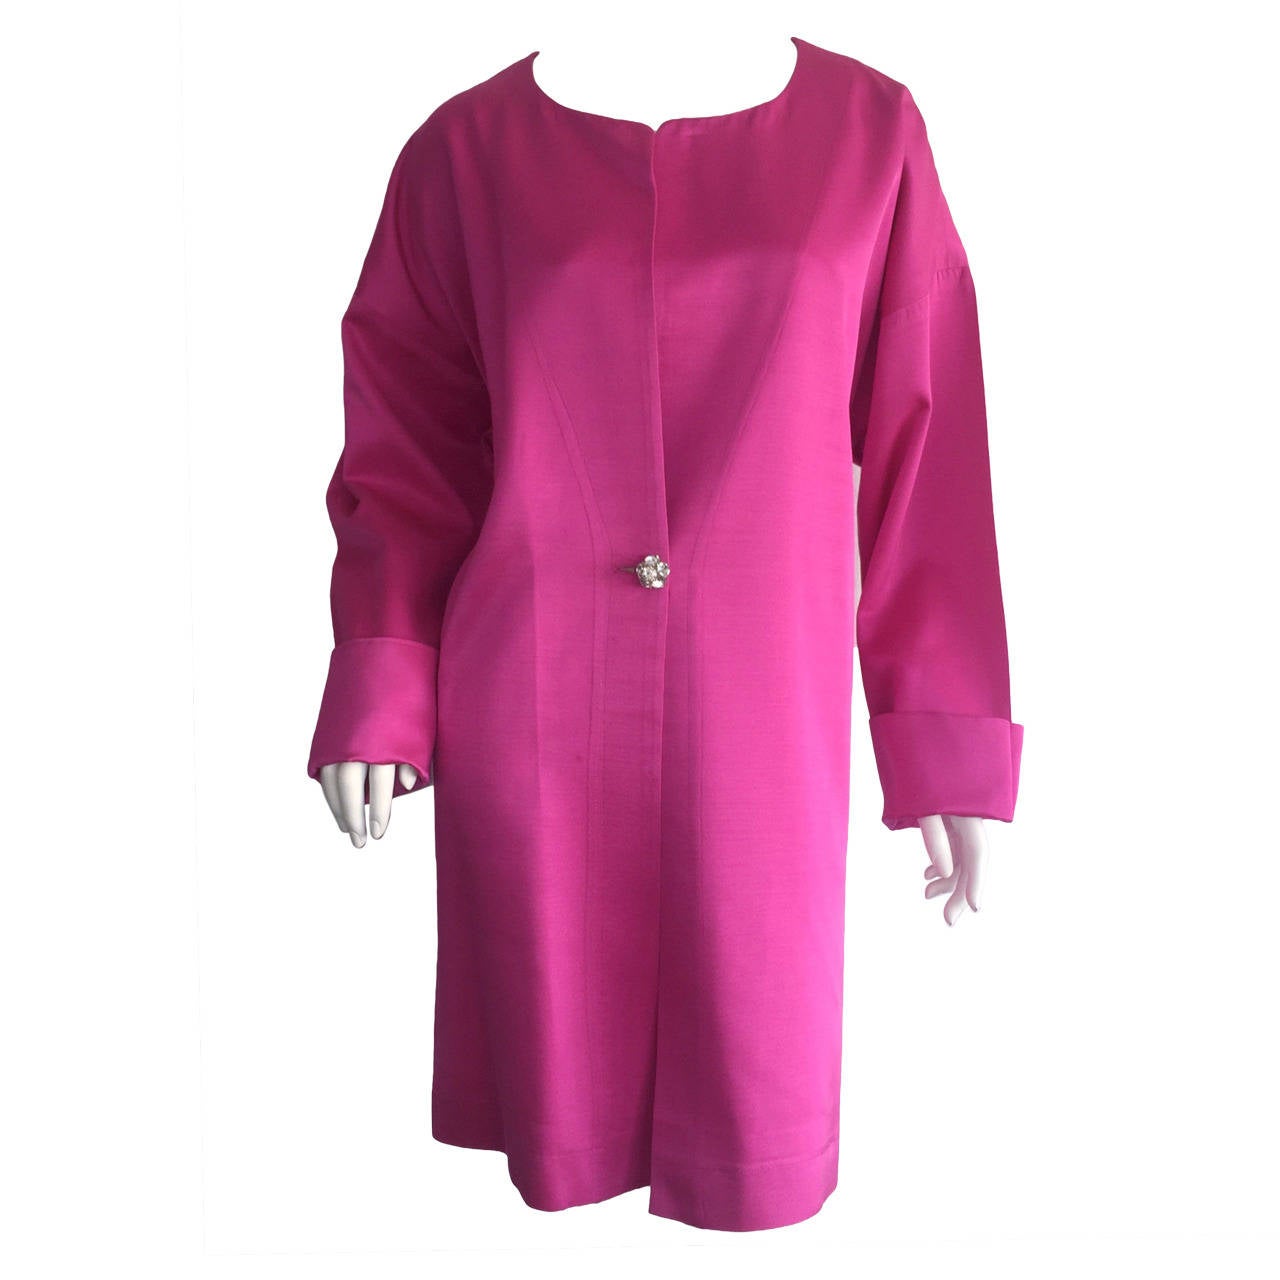 Incredible Vintage Jean Muir Hot Pink Fuchsia Silk Swing / Opera Jacket